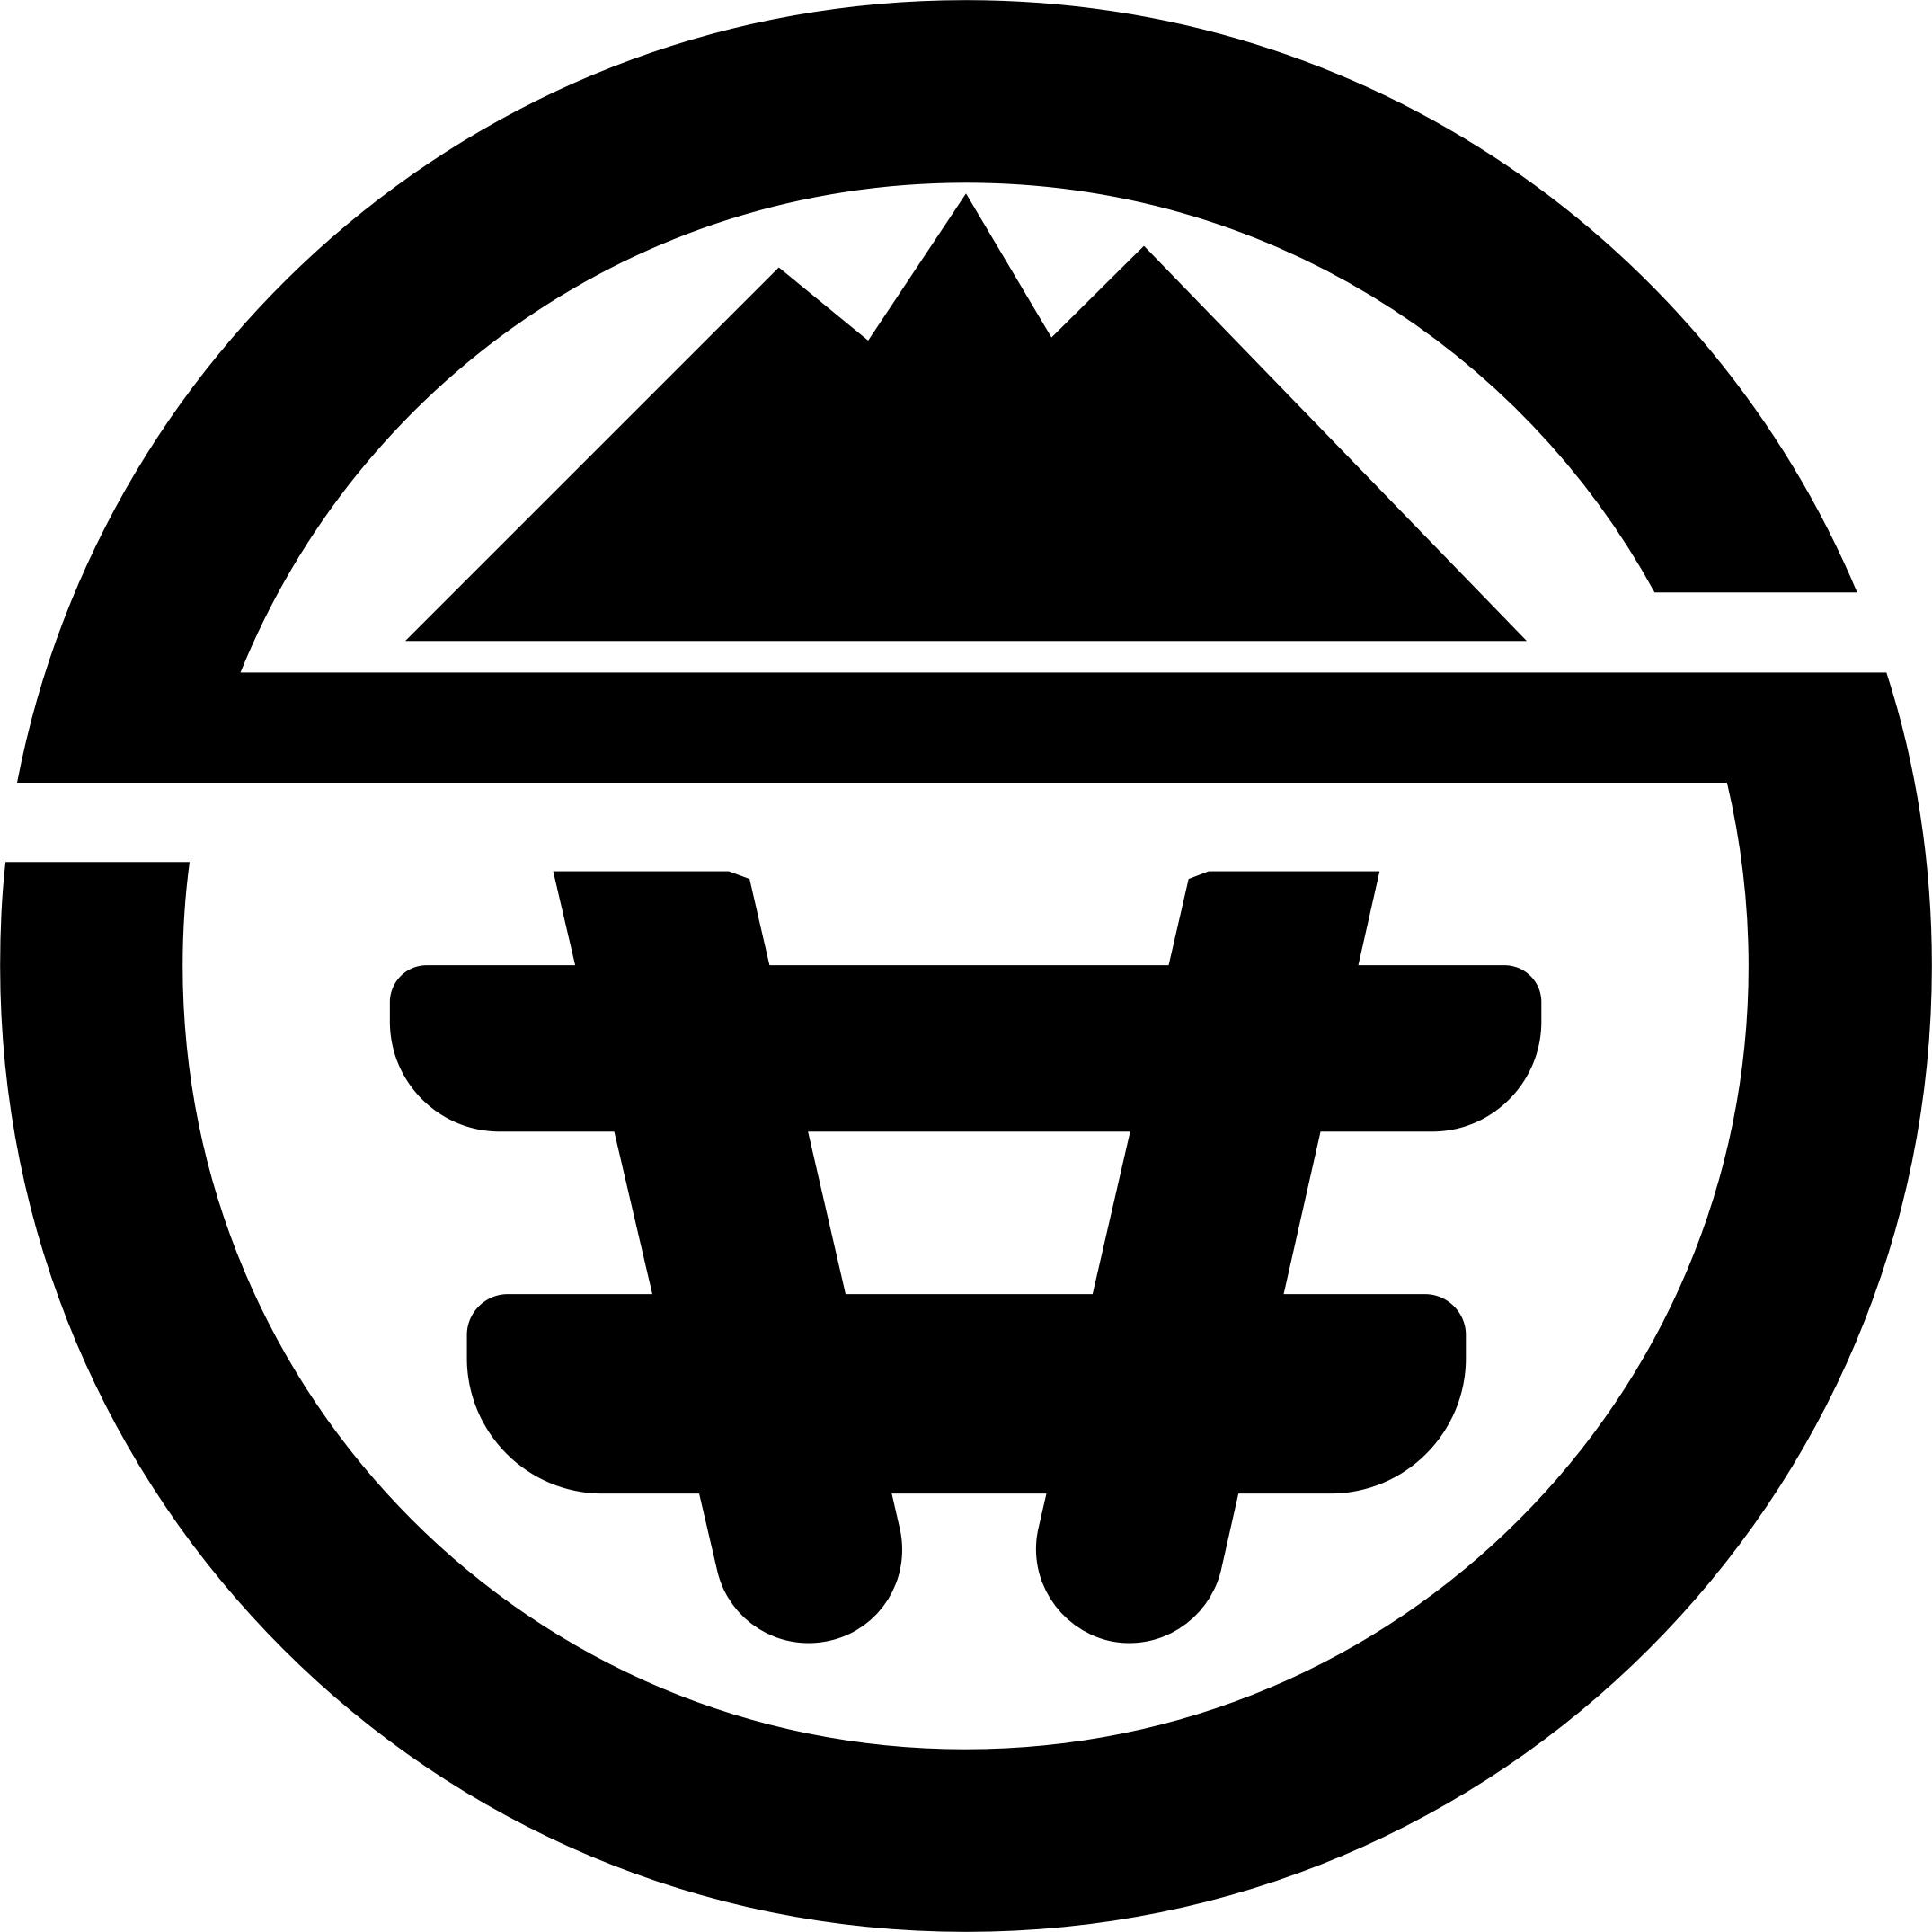 Chapter seal/emblem of the former Kanai township, Niigata png